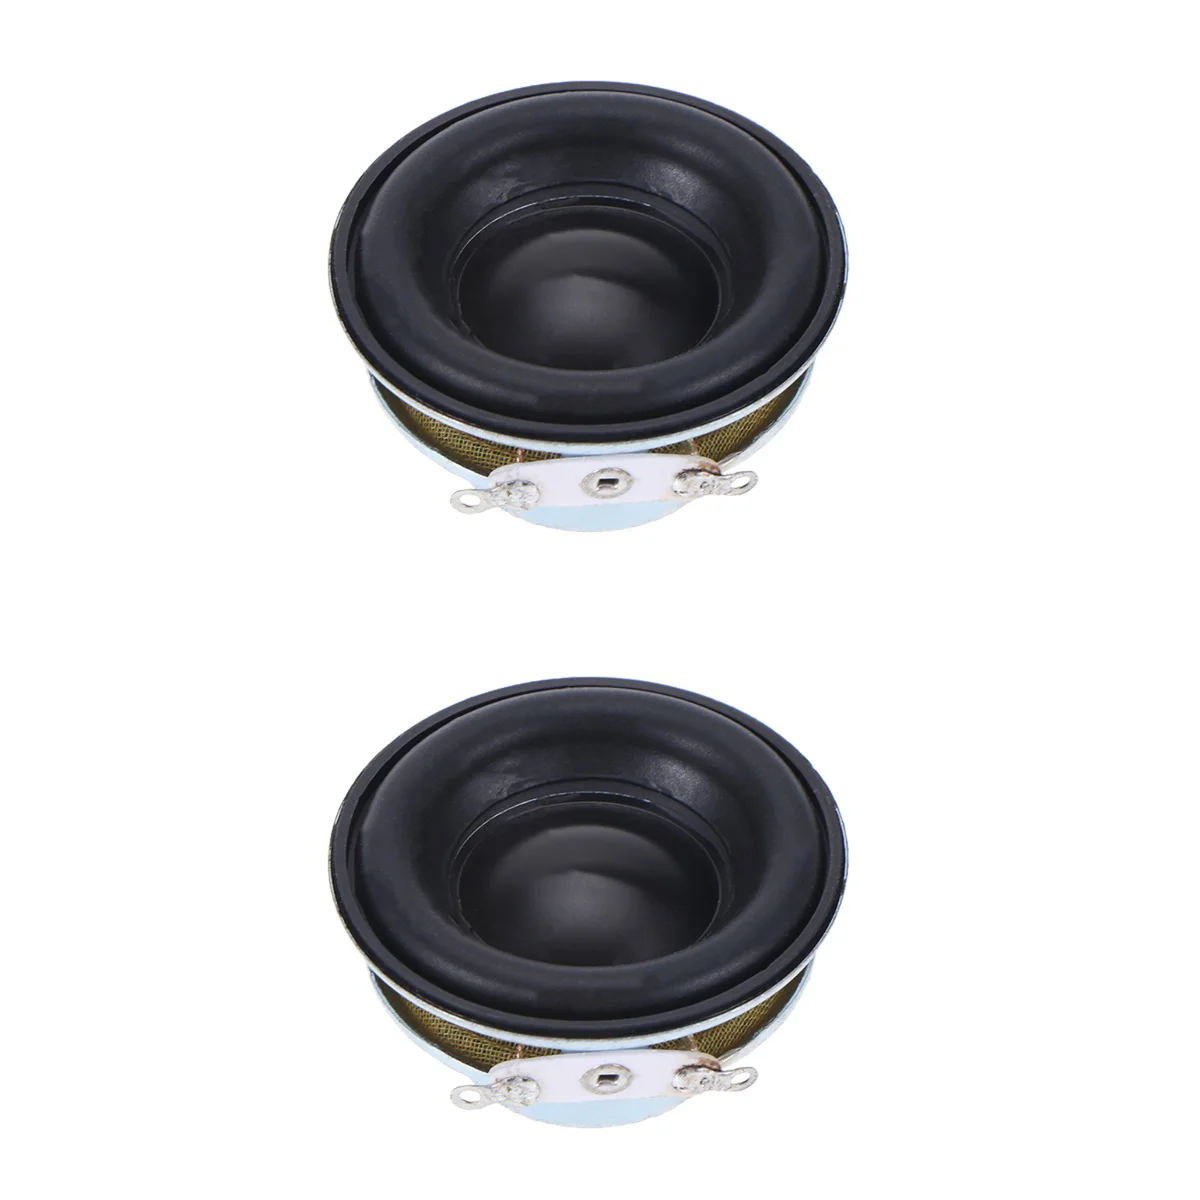 

2 Pcs 40MM Full Range Speakers 4 Ohm 5W Enthusiast DIY Flat Arc Rubber Neodymium Magnet HiFi Speaker